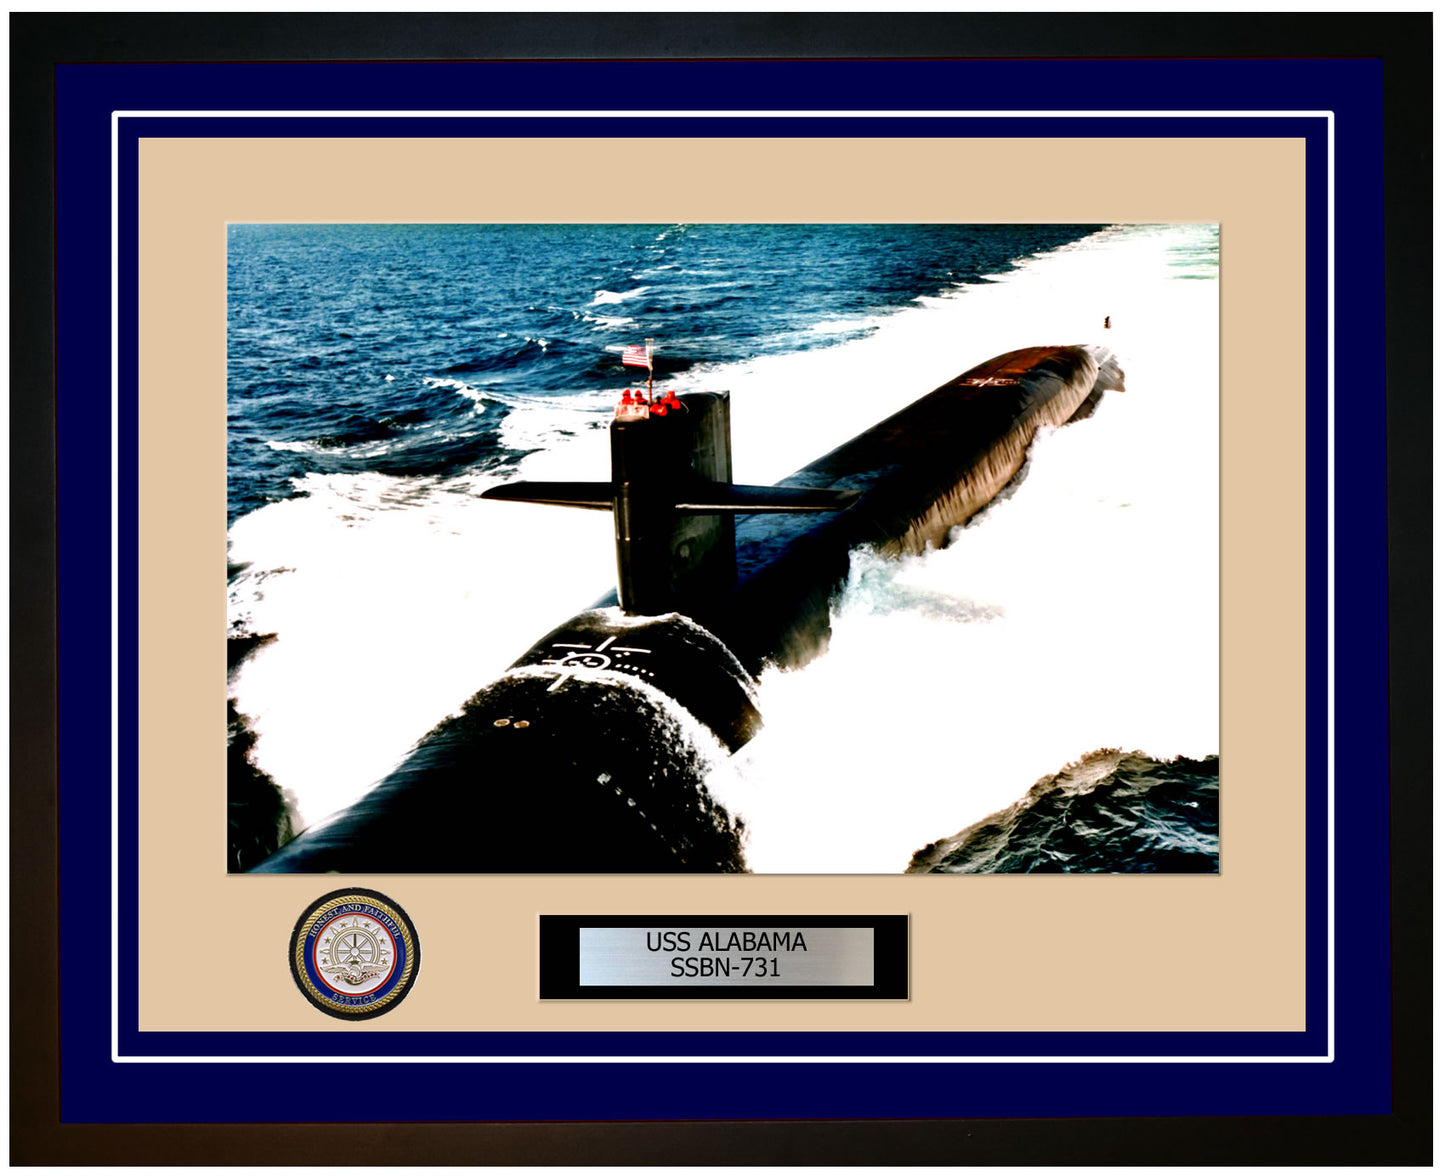 USS Alabama SSBN-731 Framed Navy Ship Photo Blue